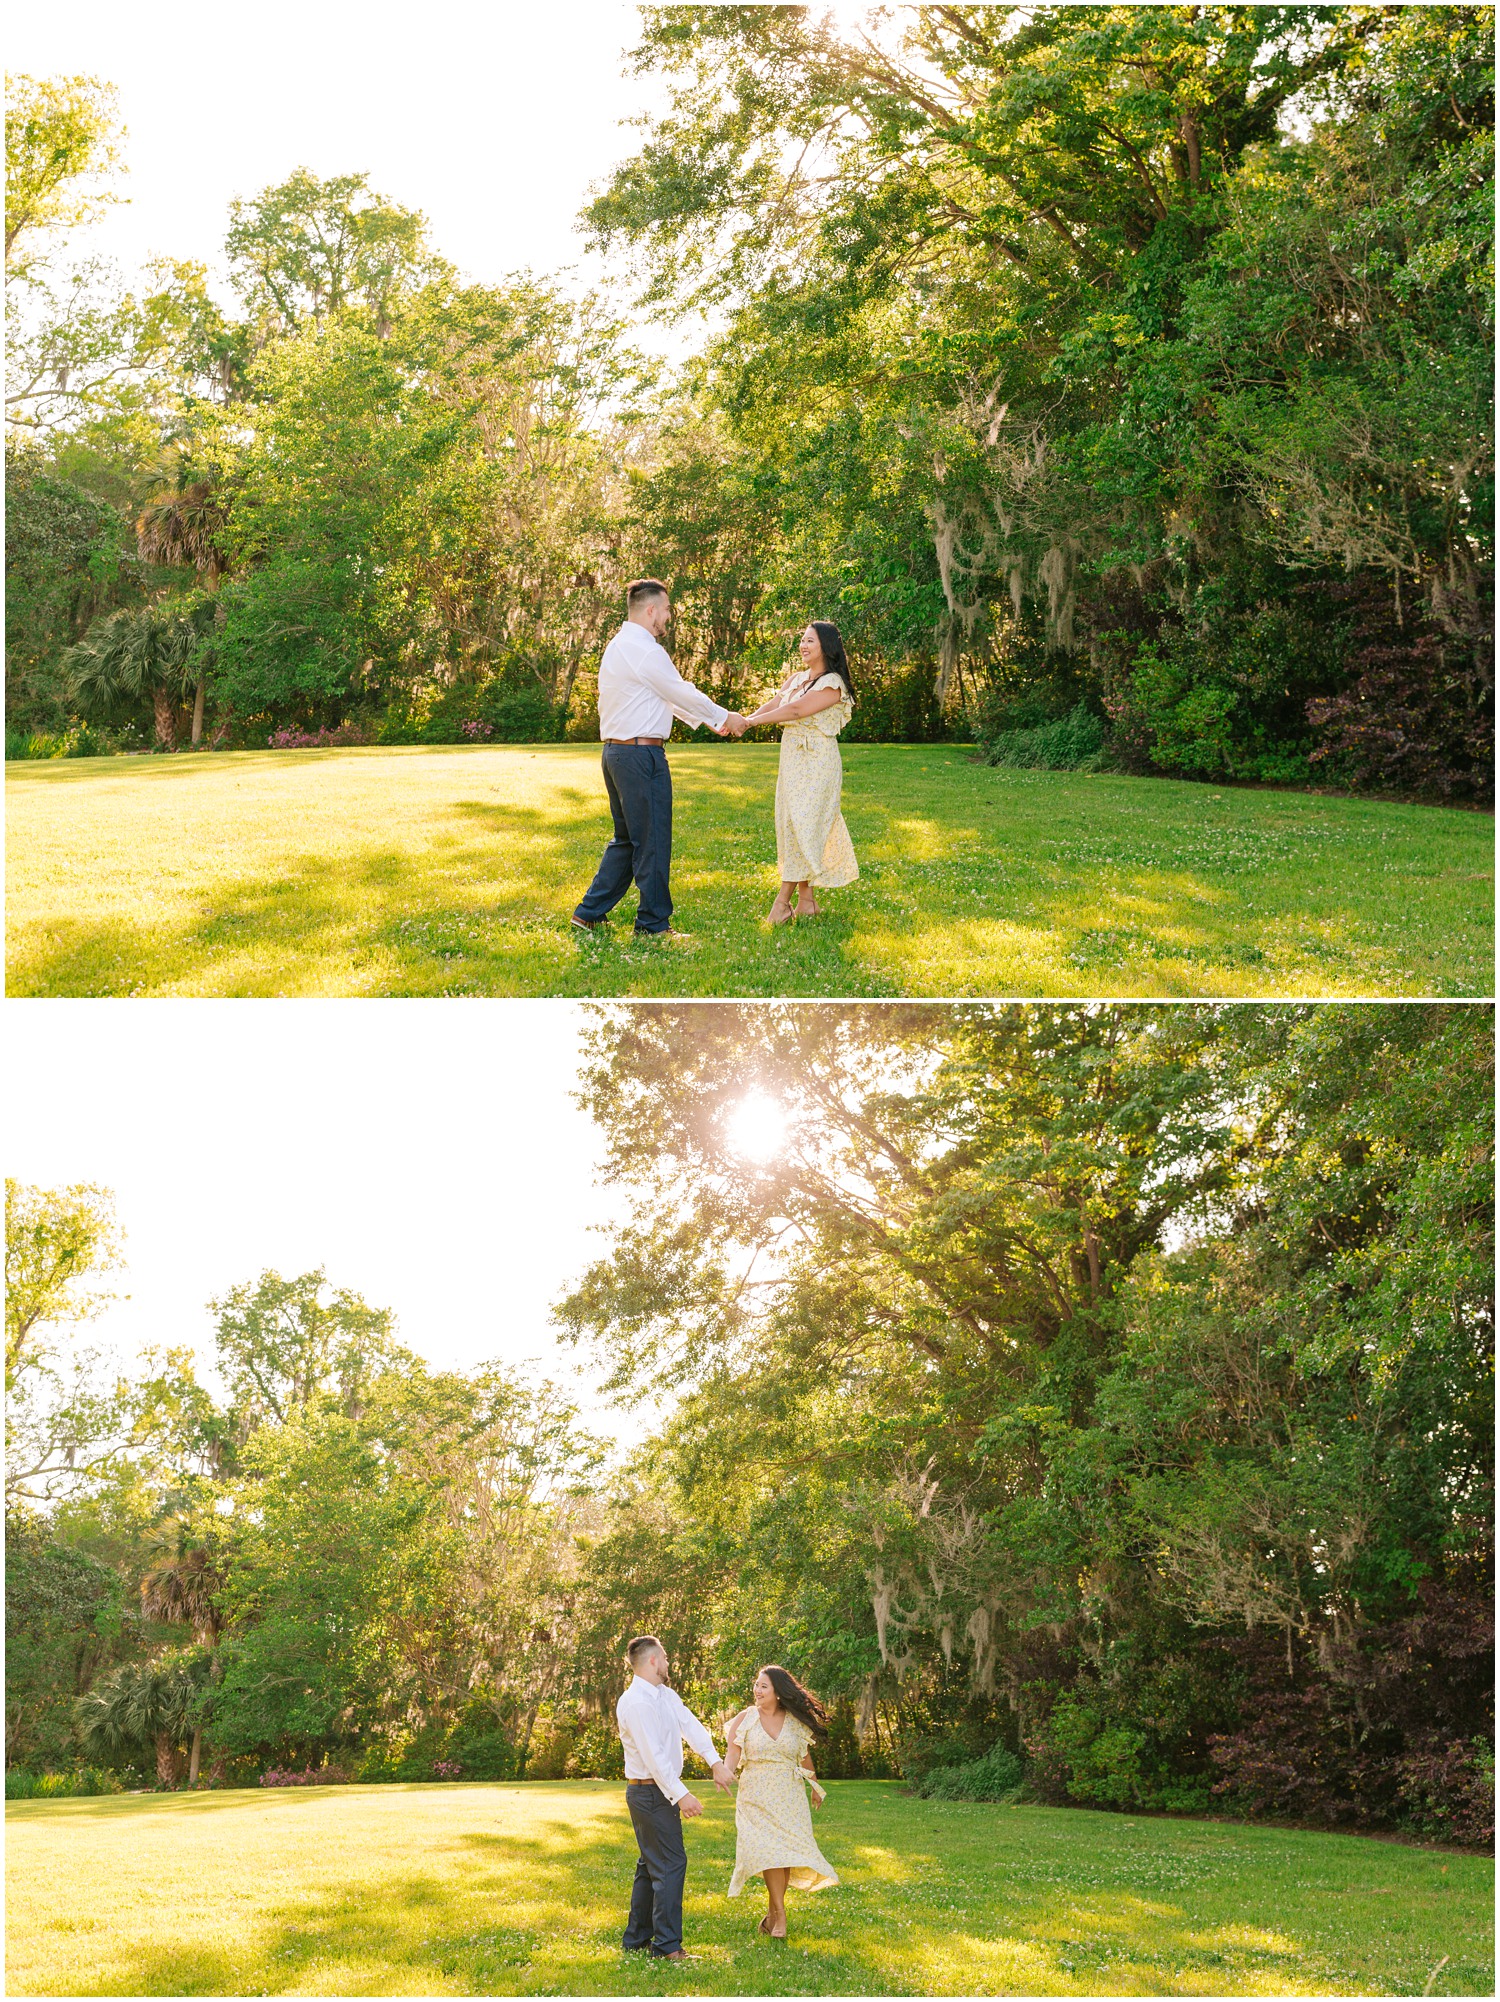 Destination-Wedding-Photographer_Magnolia-Plantation-Engagement-Session_Jess-and-Justin_Charleston-South-Carolina_0006.jpg